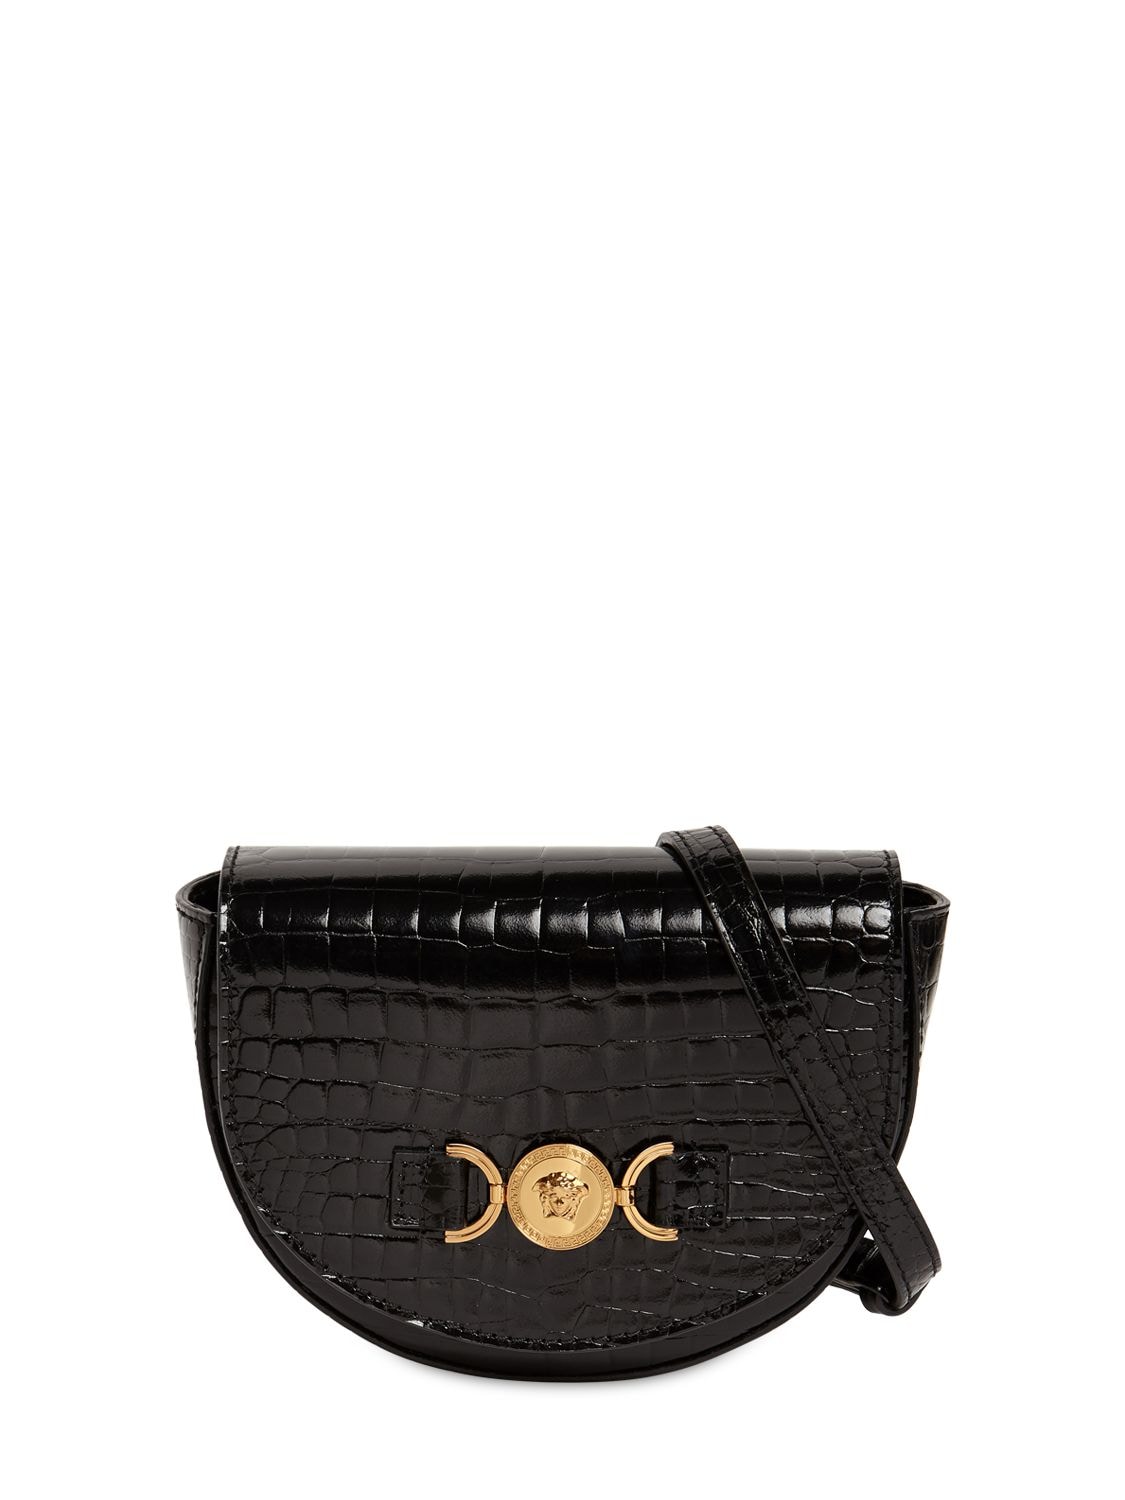 Versace Kids' Croc Embossed Patent Leather Bag In Black